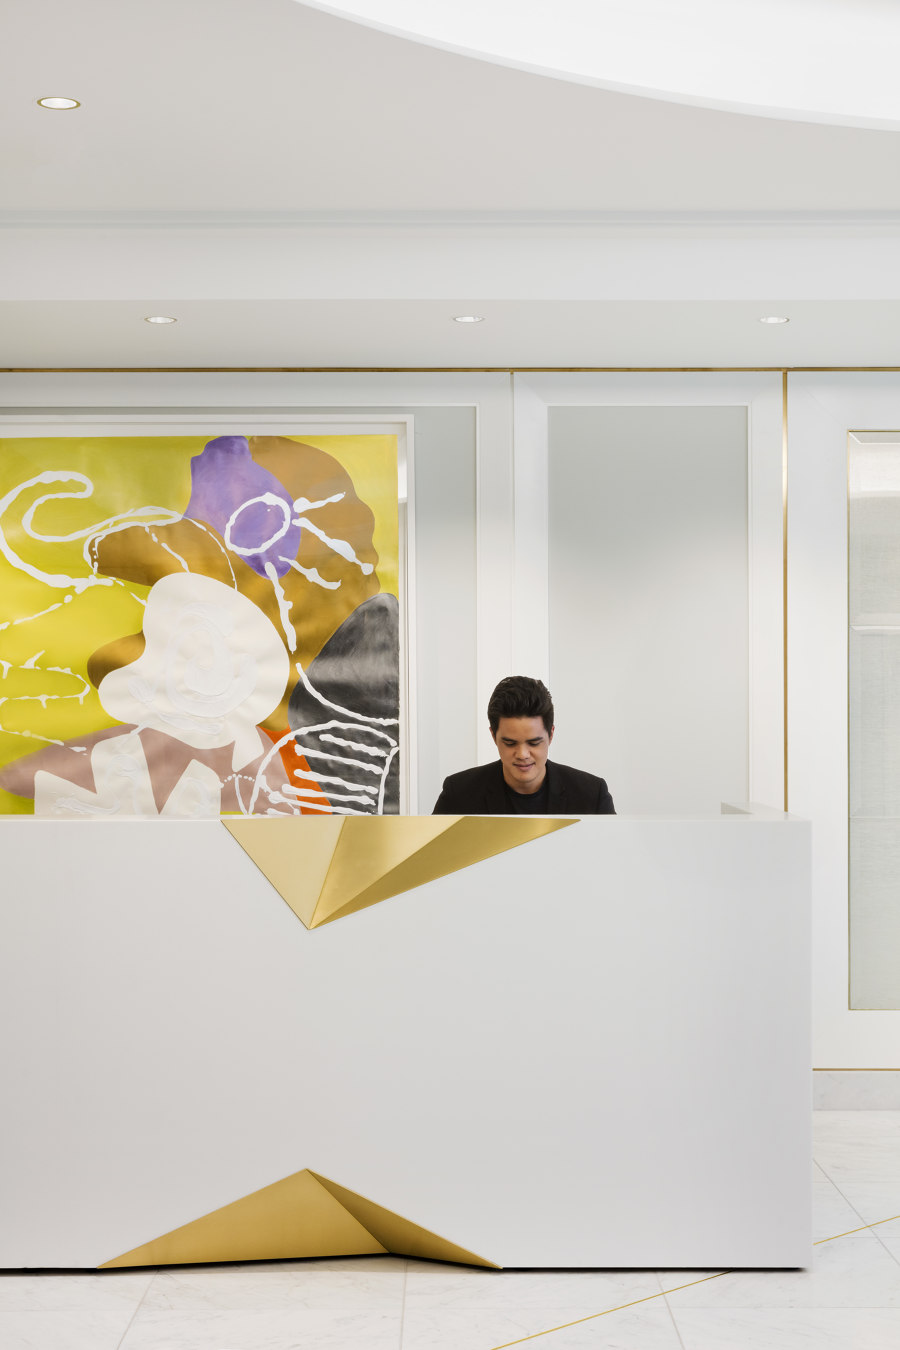 Mintz by Elkus Manfredi Architects | Office facilities